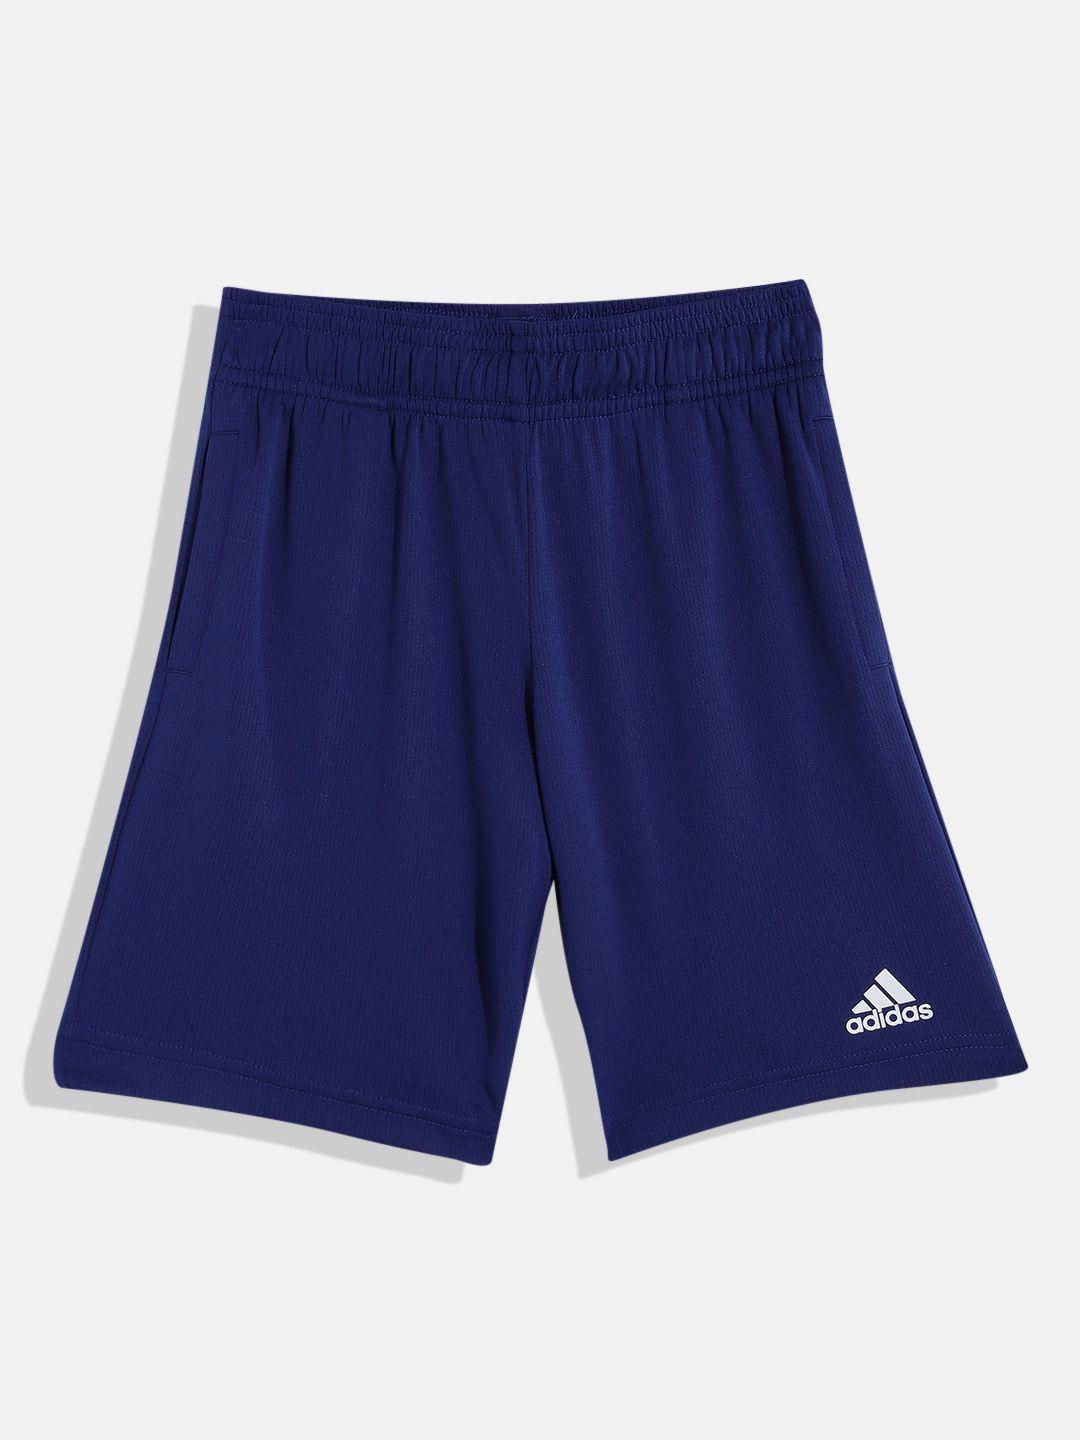 adidas boys navy blue shorts